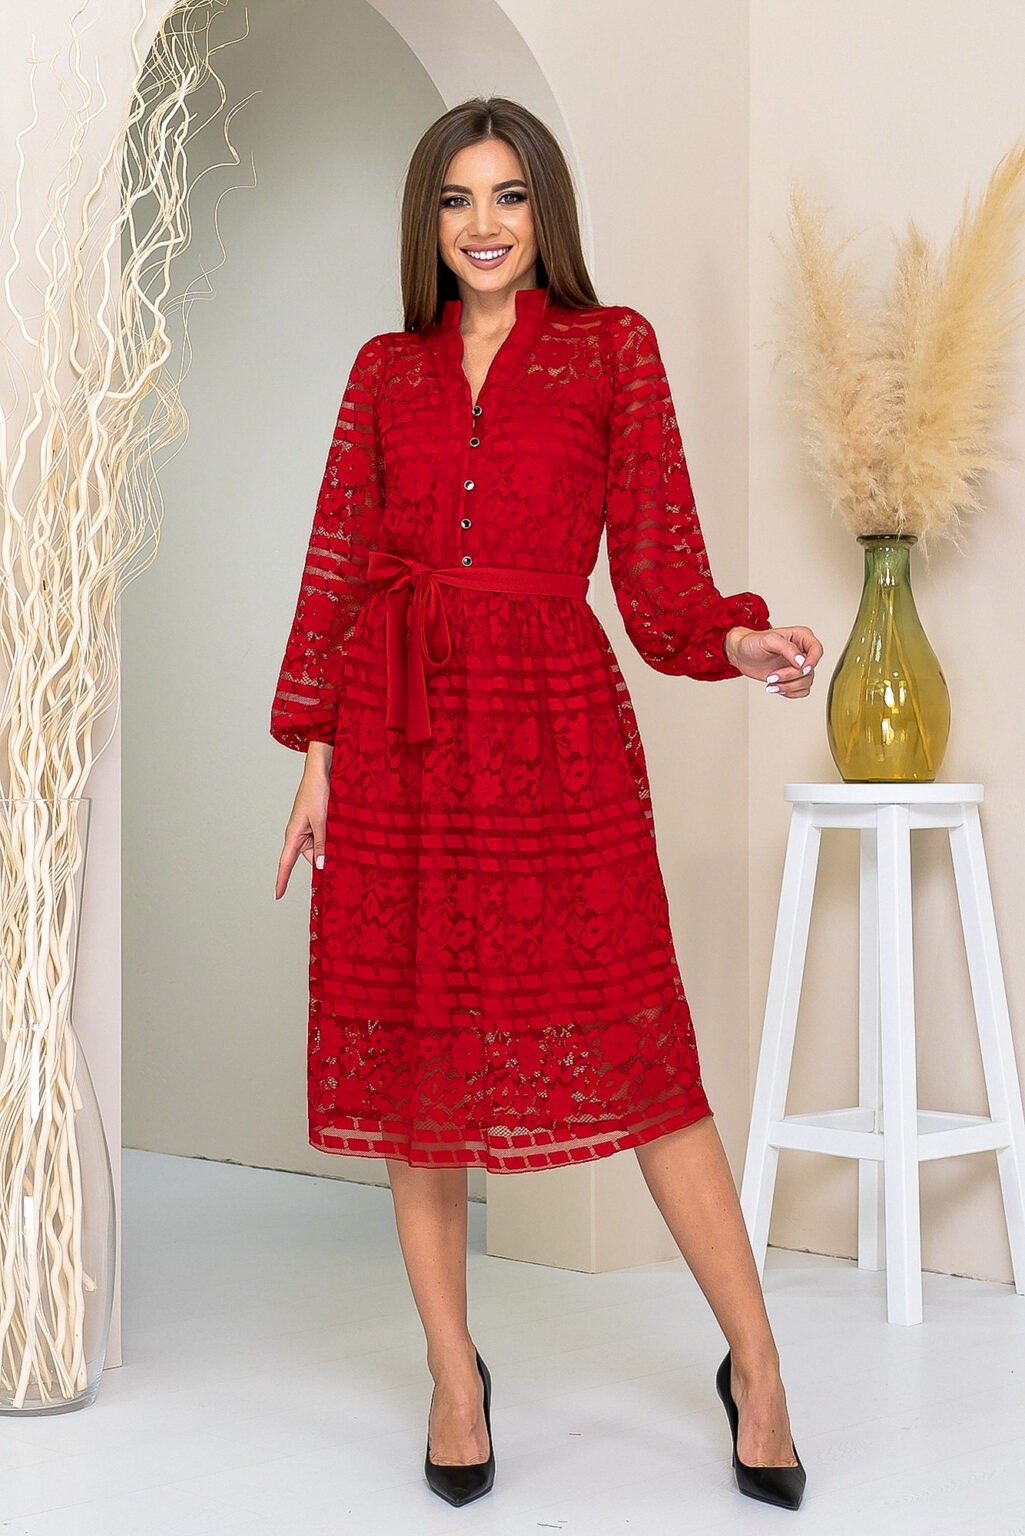 Casual red dress by Tanita-Romario